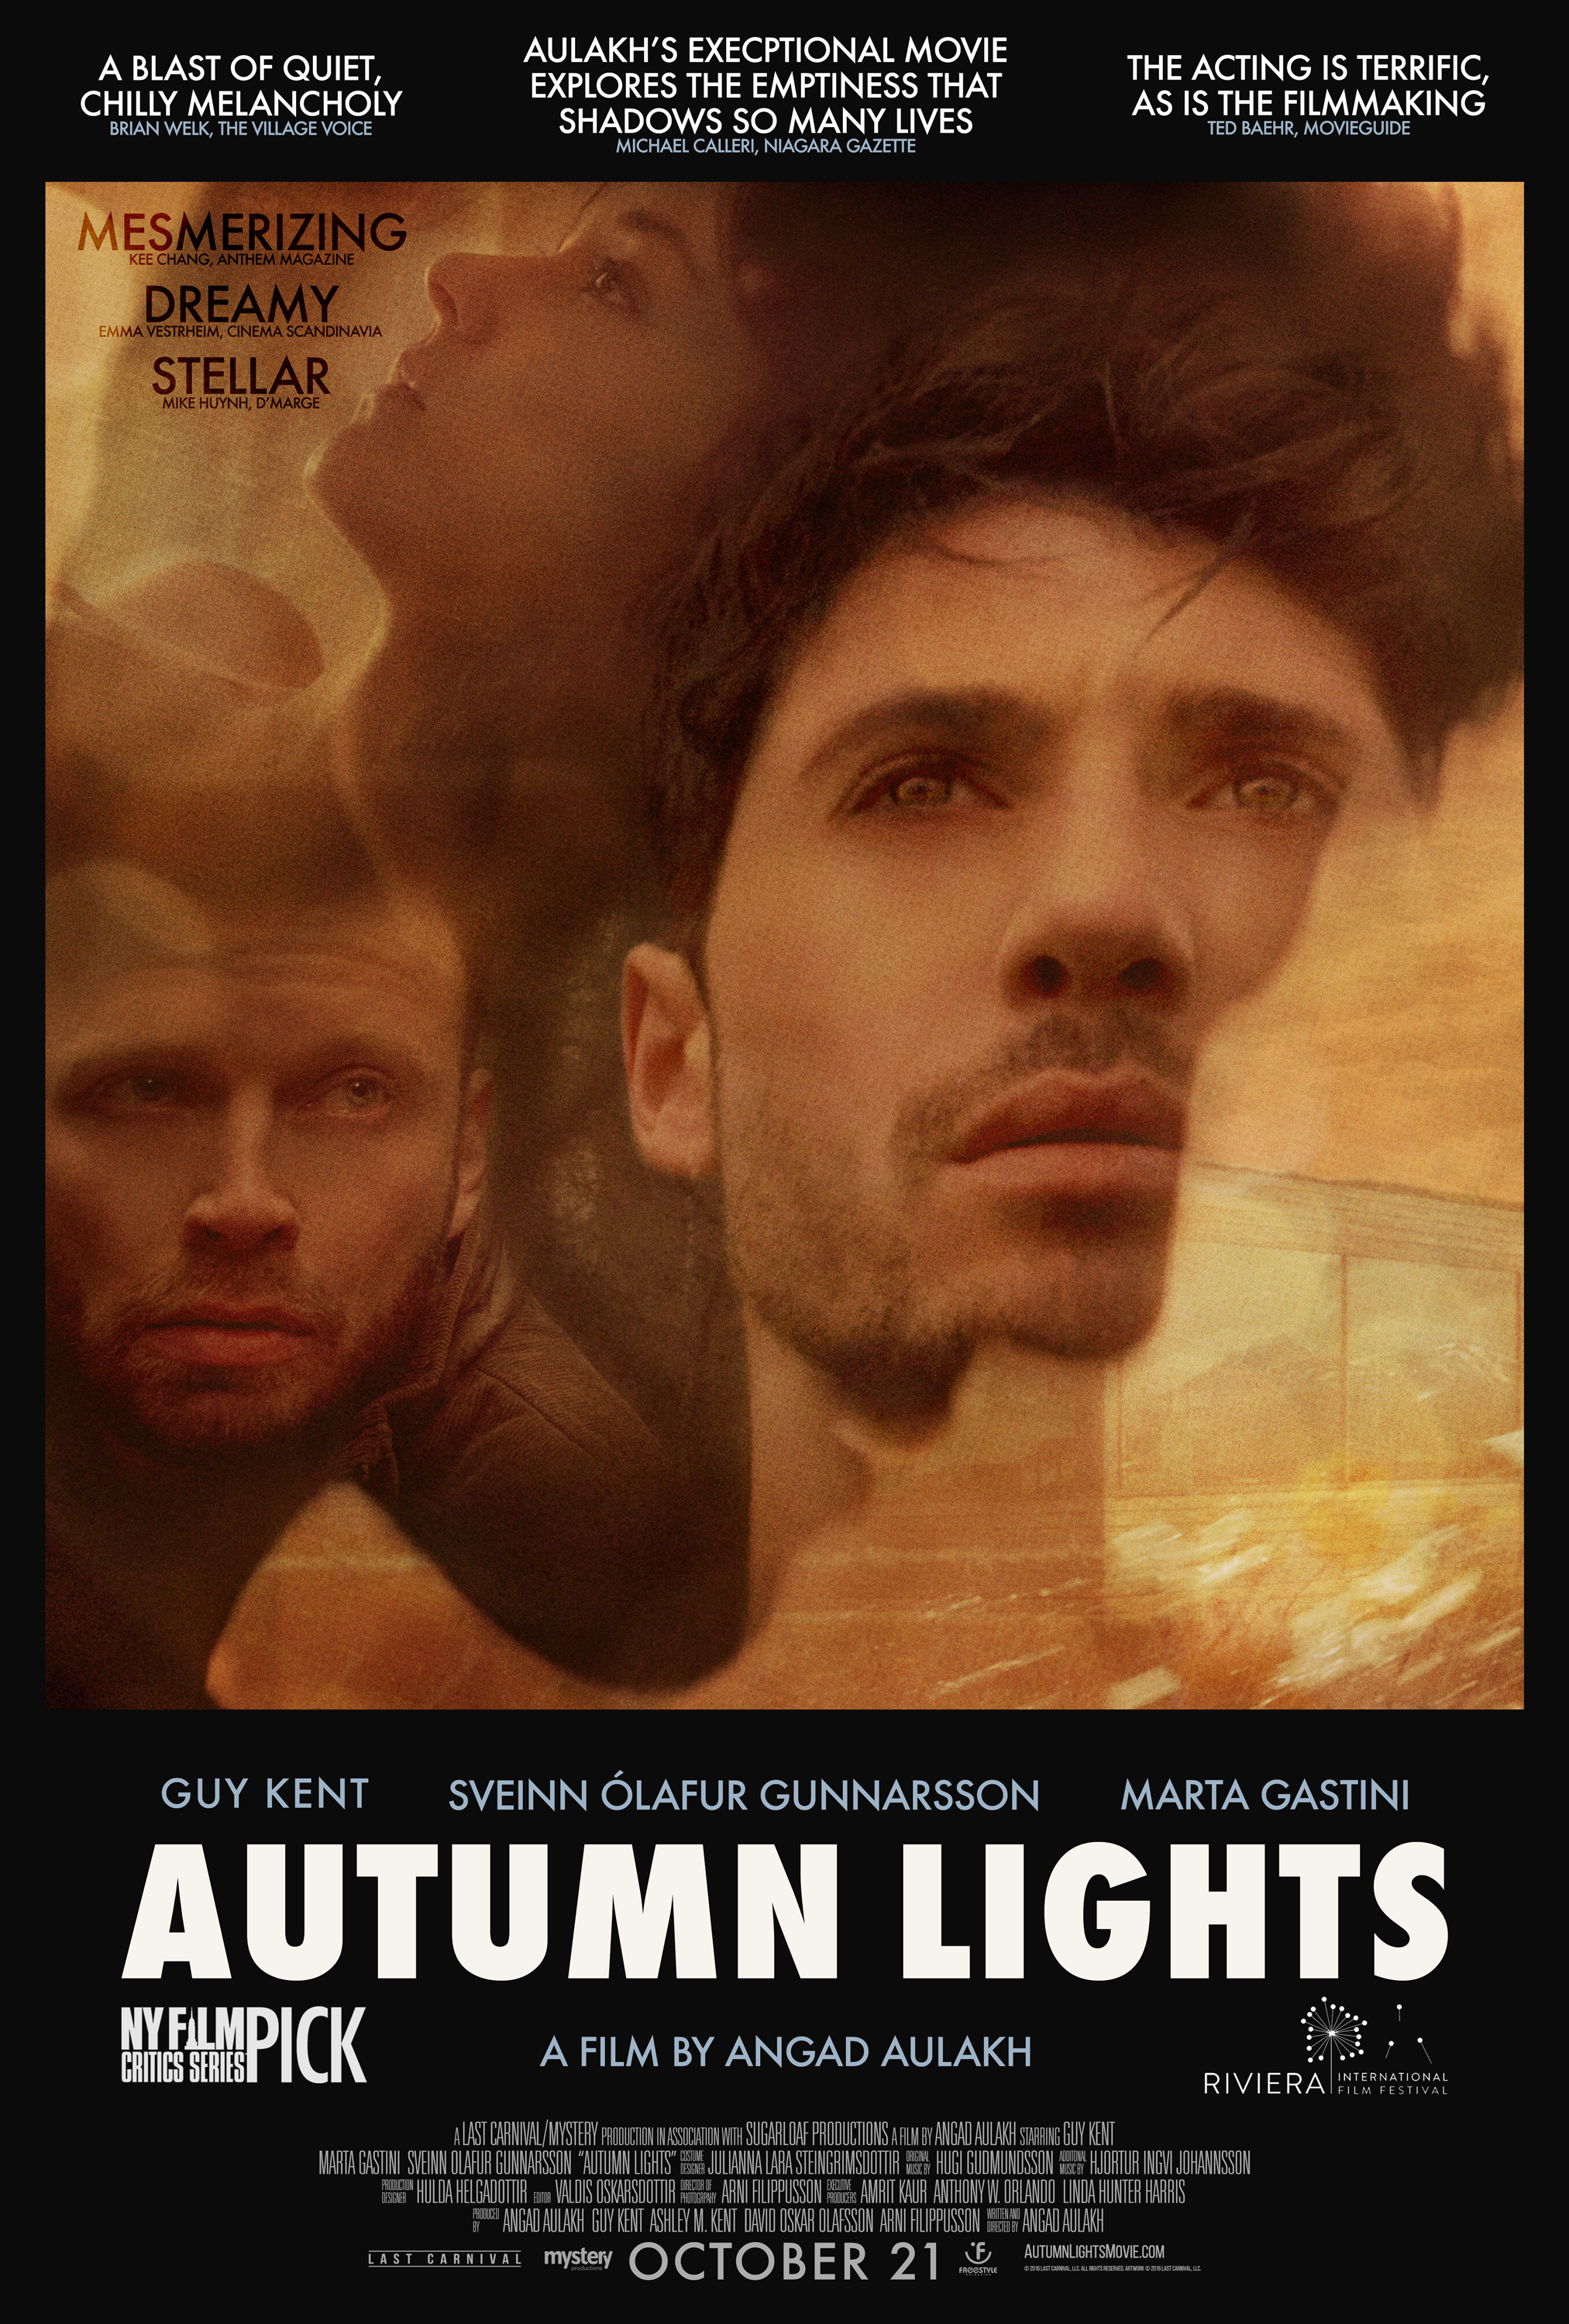 Nonton film Autumn Lights layarkaca21 indoxx1 ganool online streaming terbaru